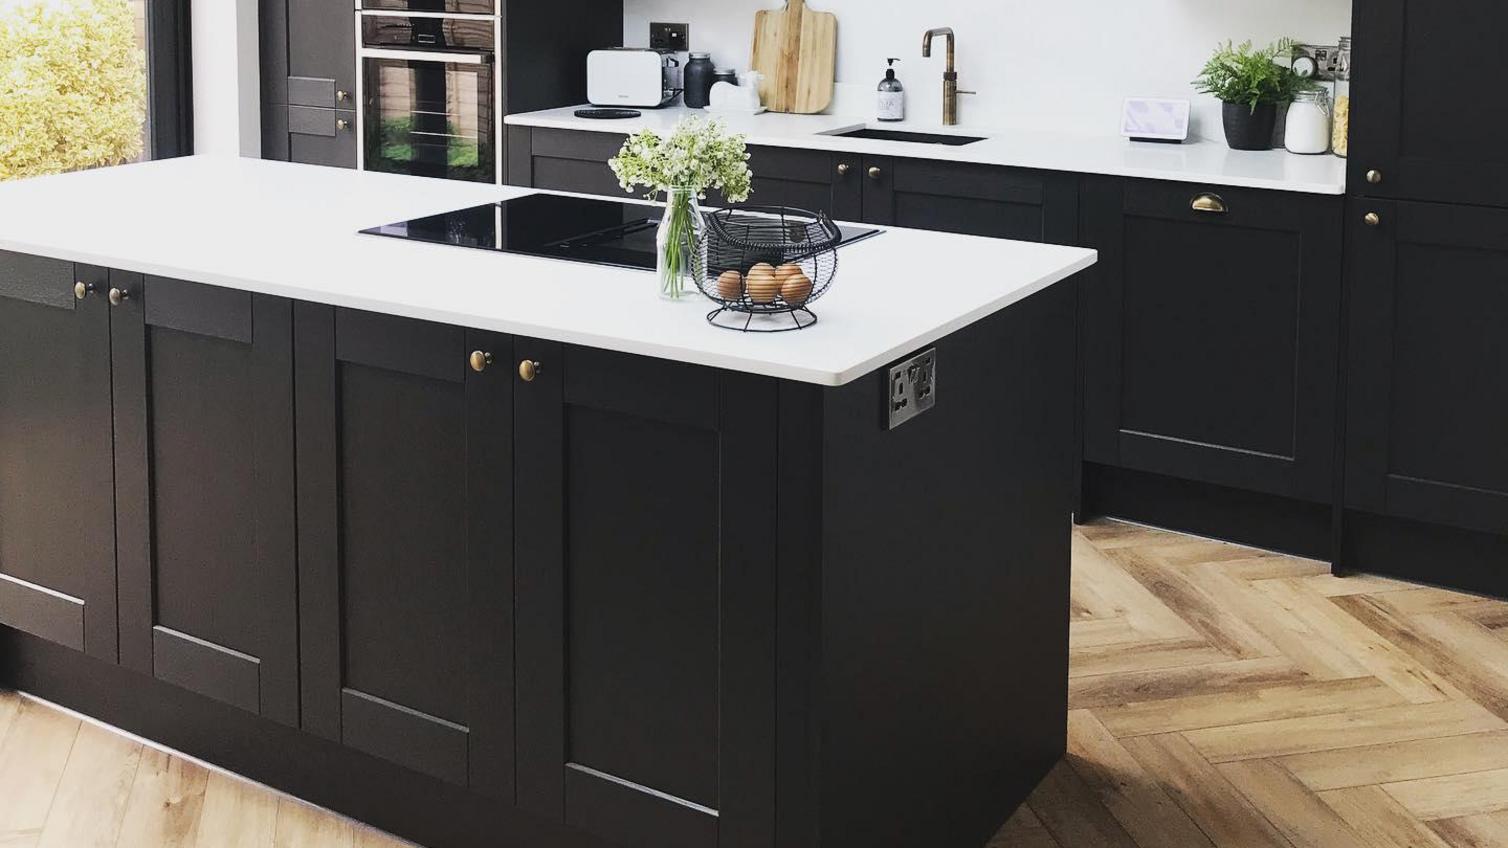 Black shaker kitchen with an island layout, with brass knob handles, chevron flooring and a white quartz worktop.